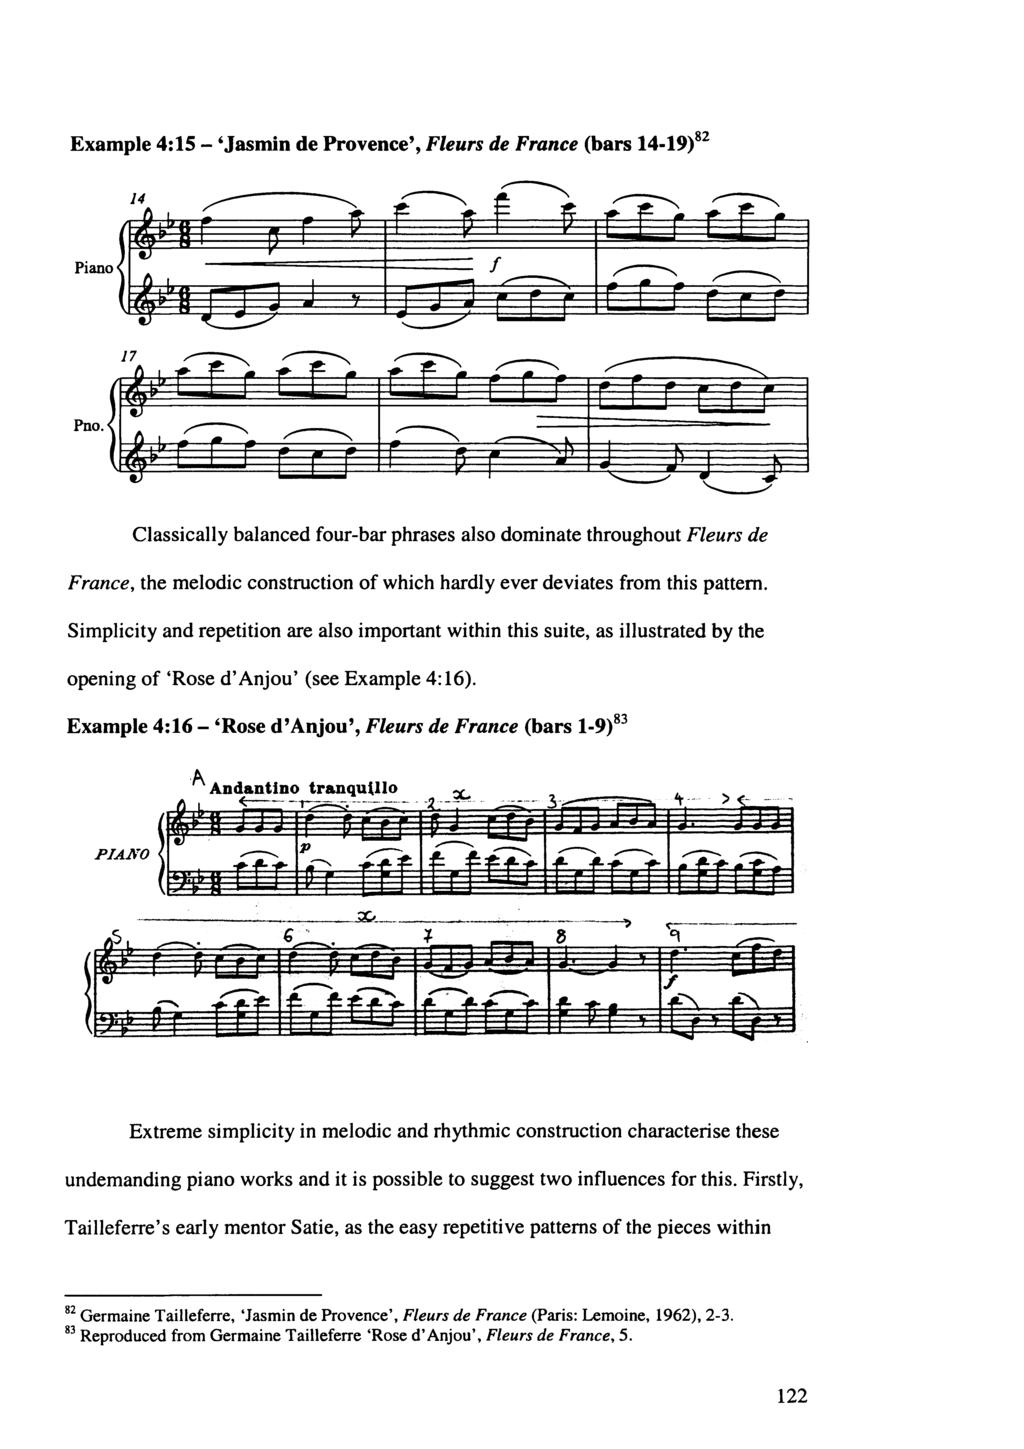 Example 4:15 - Jasmin de Provence, Fleurs de France (bars 14-19)82 Piano Classically balanced four-bar phrases also dominate throughout Fleurs de France, the melodic construction of which hardly ever